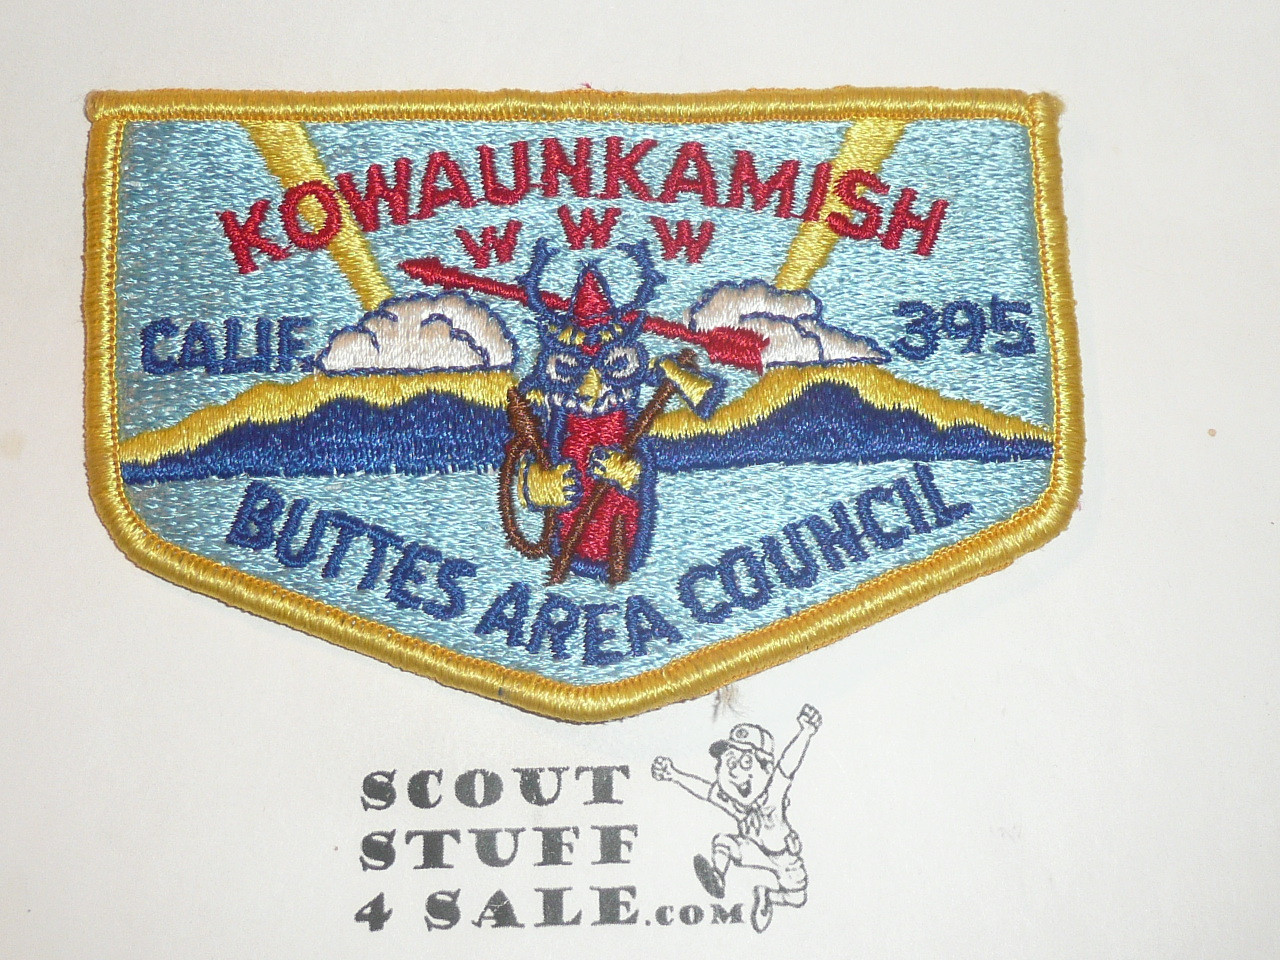 Order of the Arrow Lodge #395 Kowaunkamish s5 Brotherhood Flap Patch